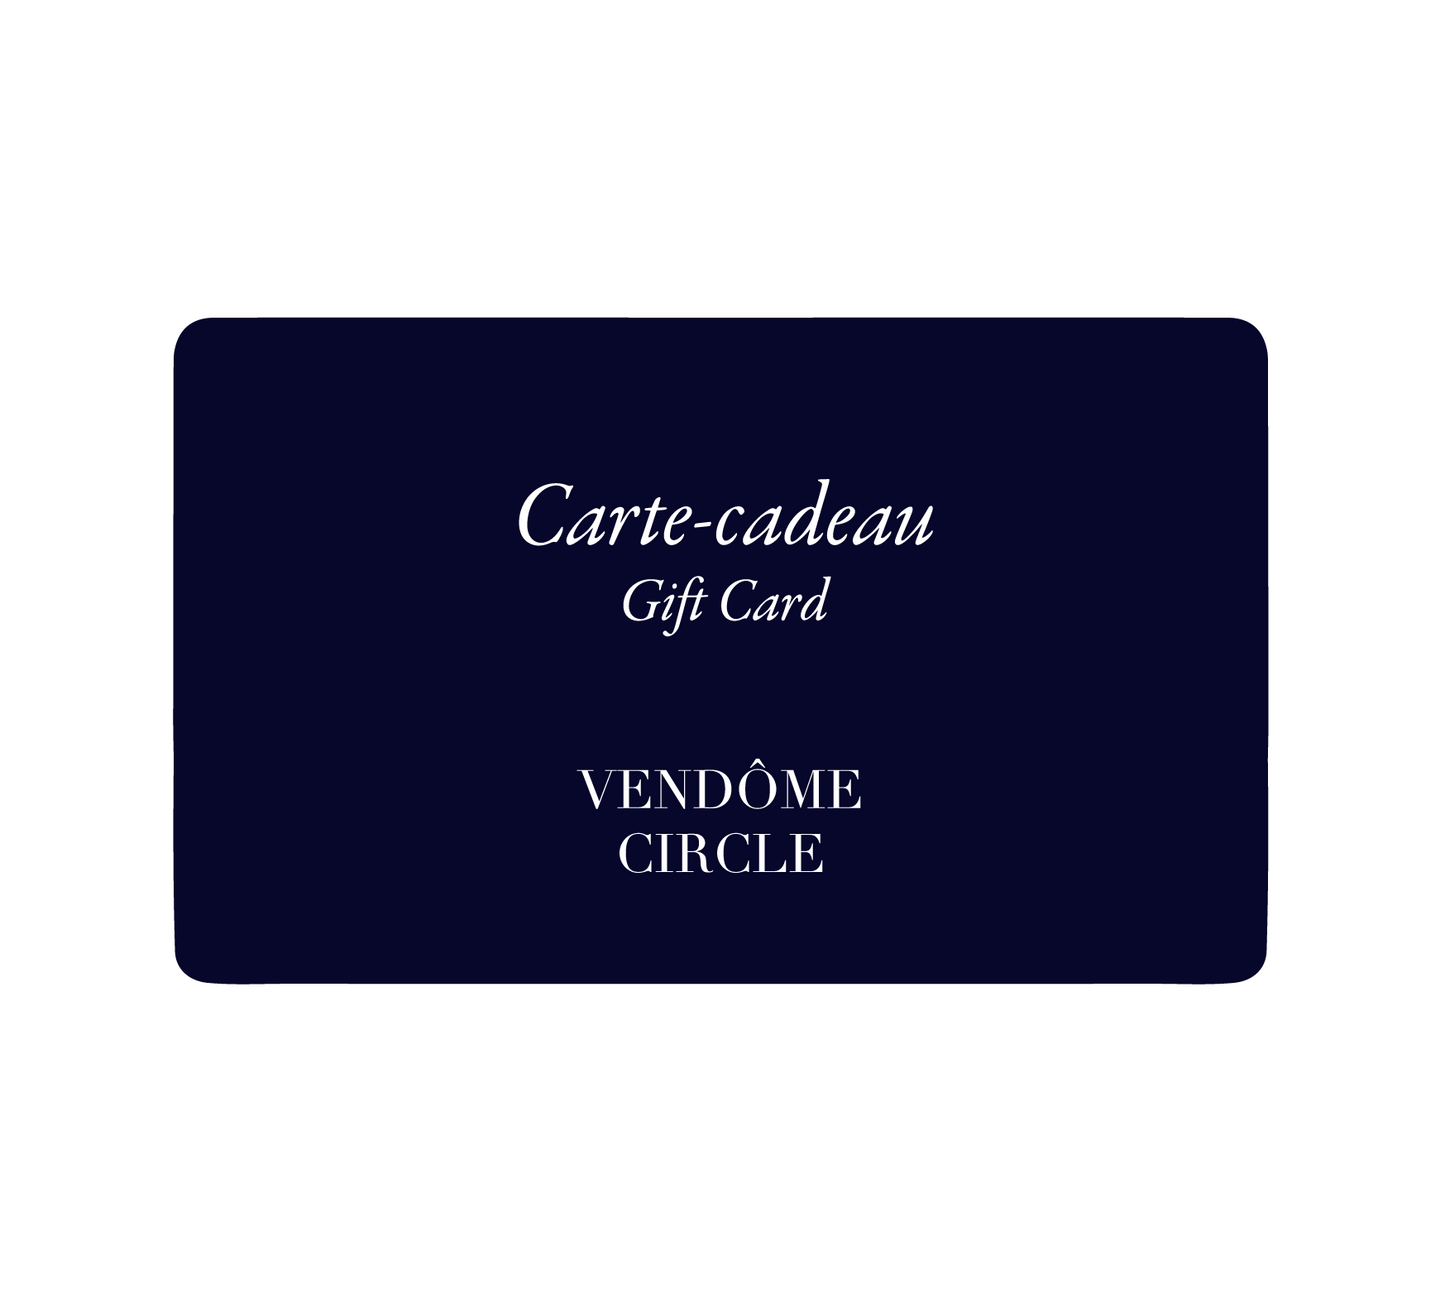 Vendôme Circle Gift Card